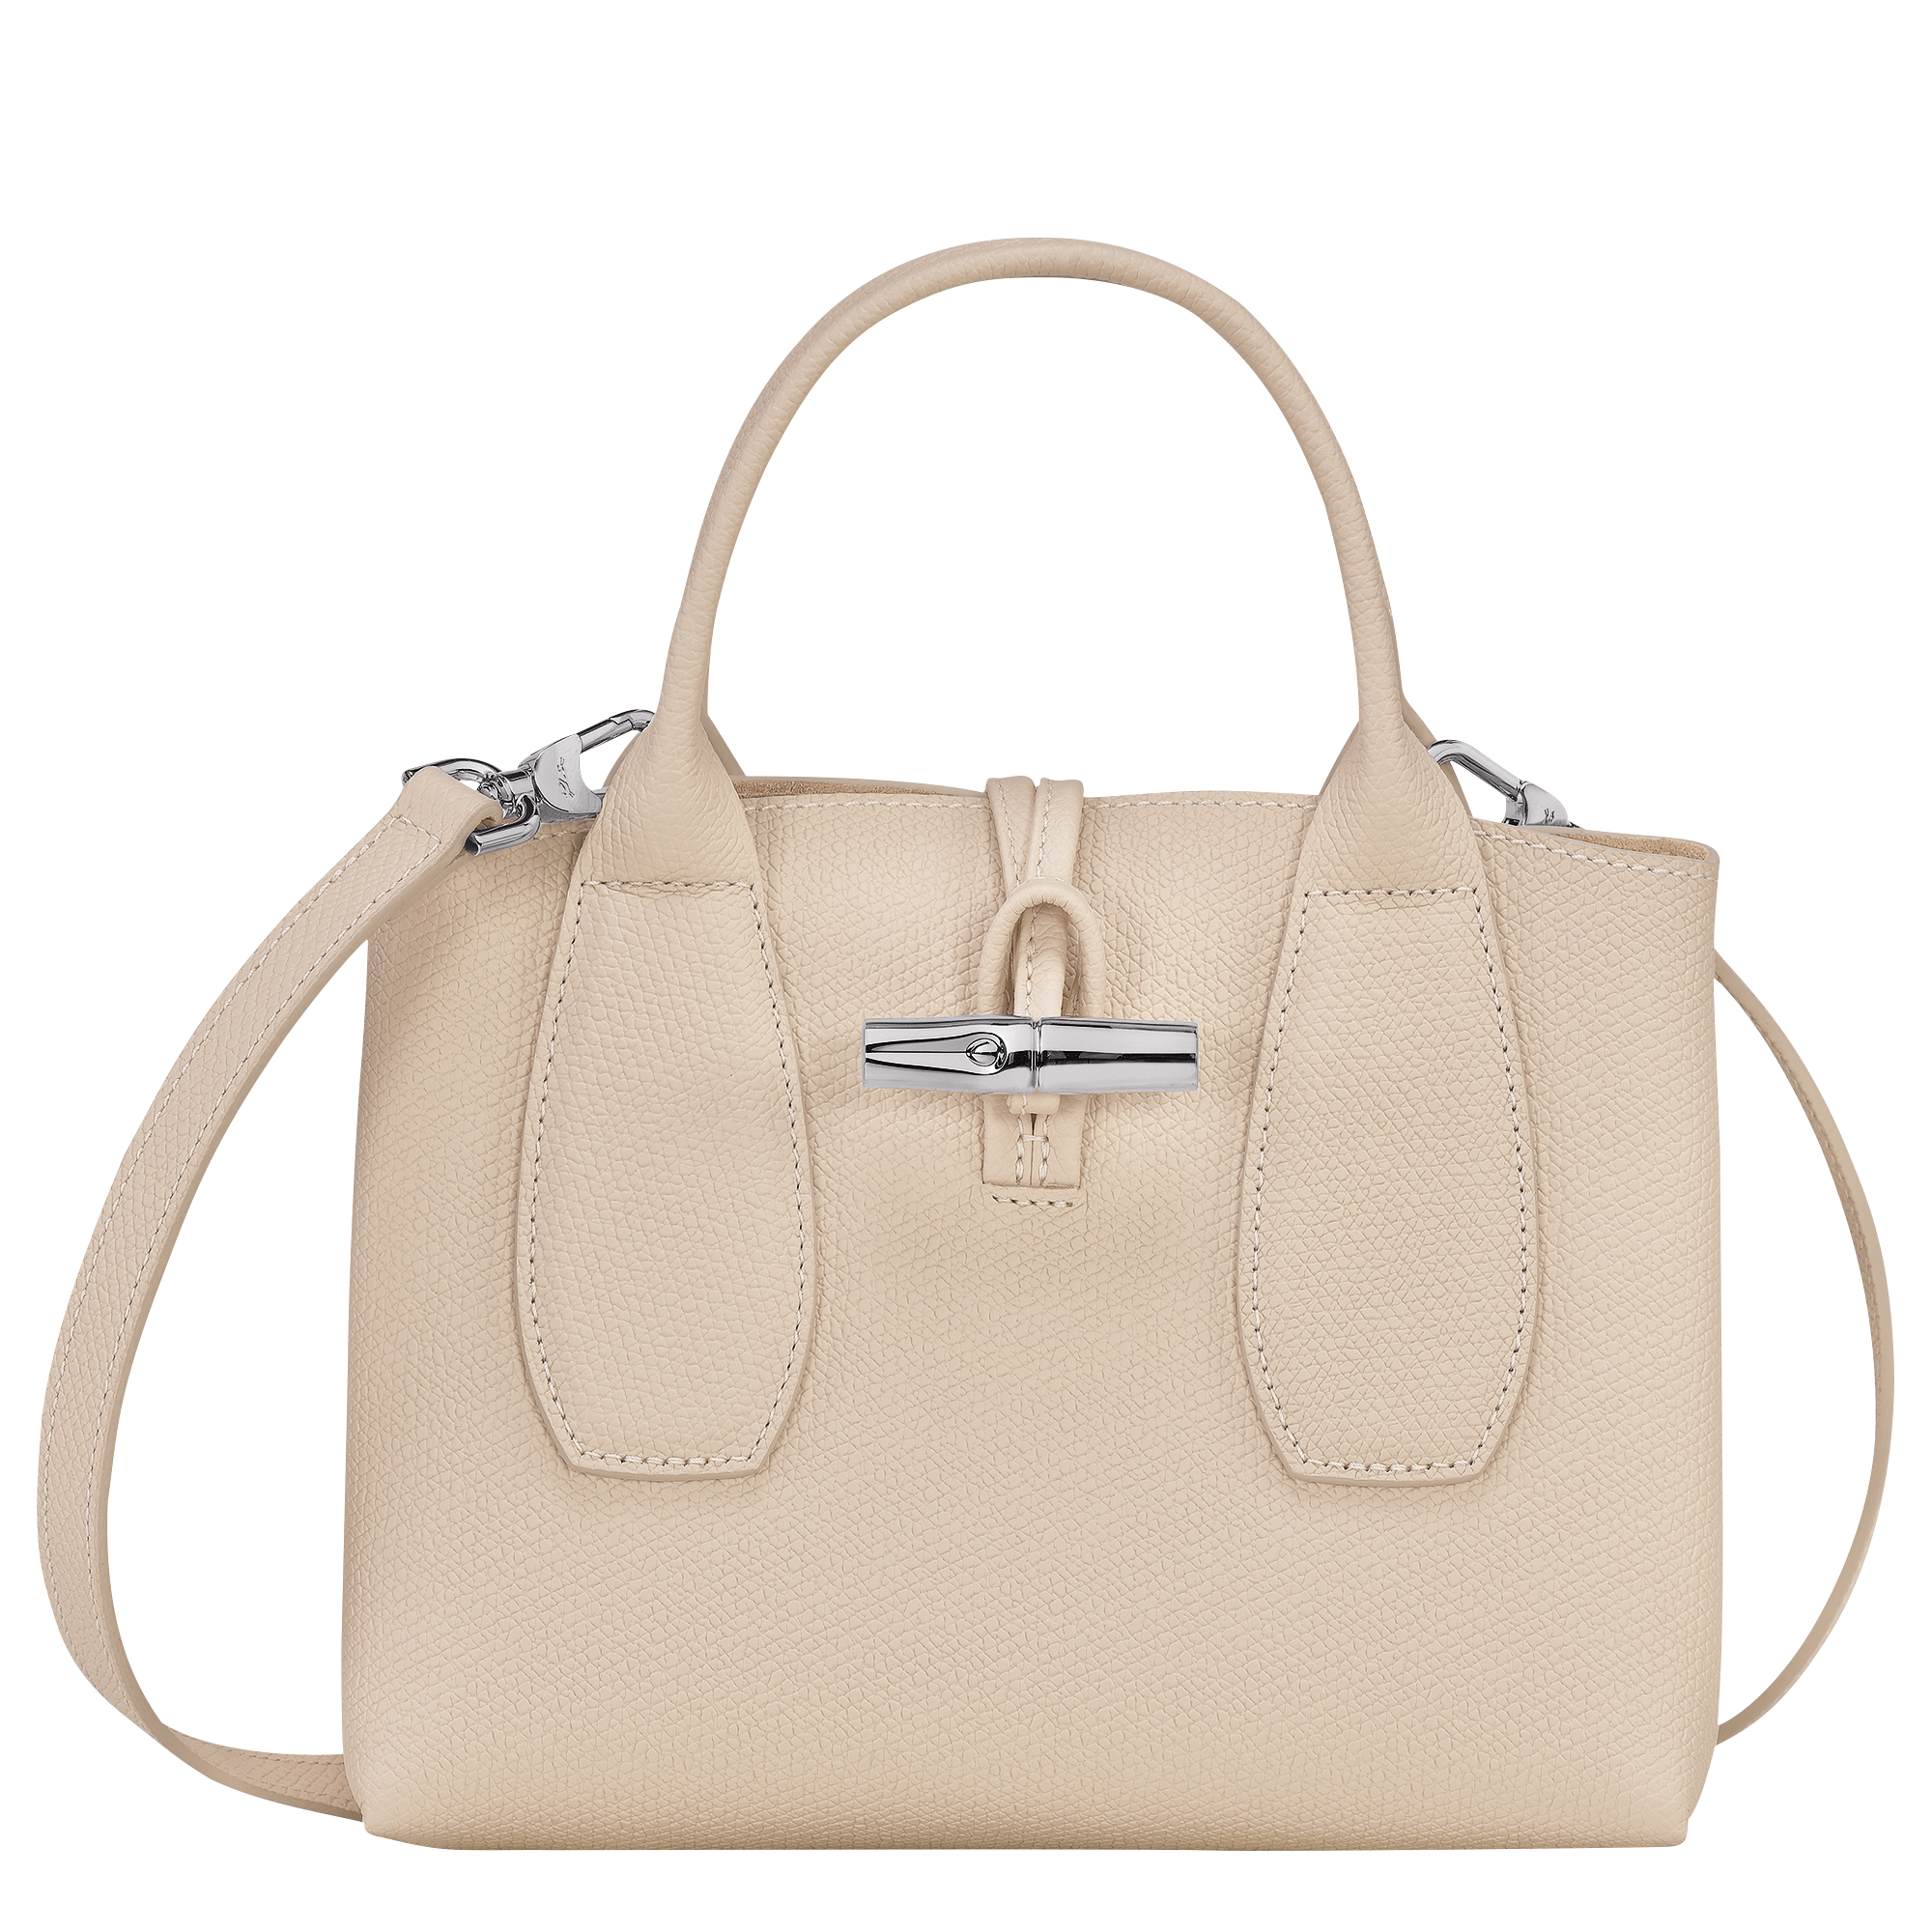 Longchamp Spring/Summer 2021: The Roseau Crossbody Bag Gets